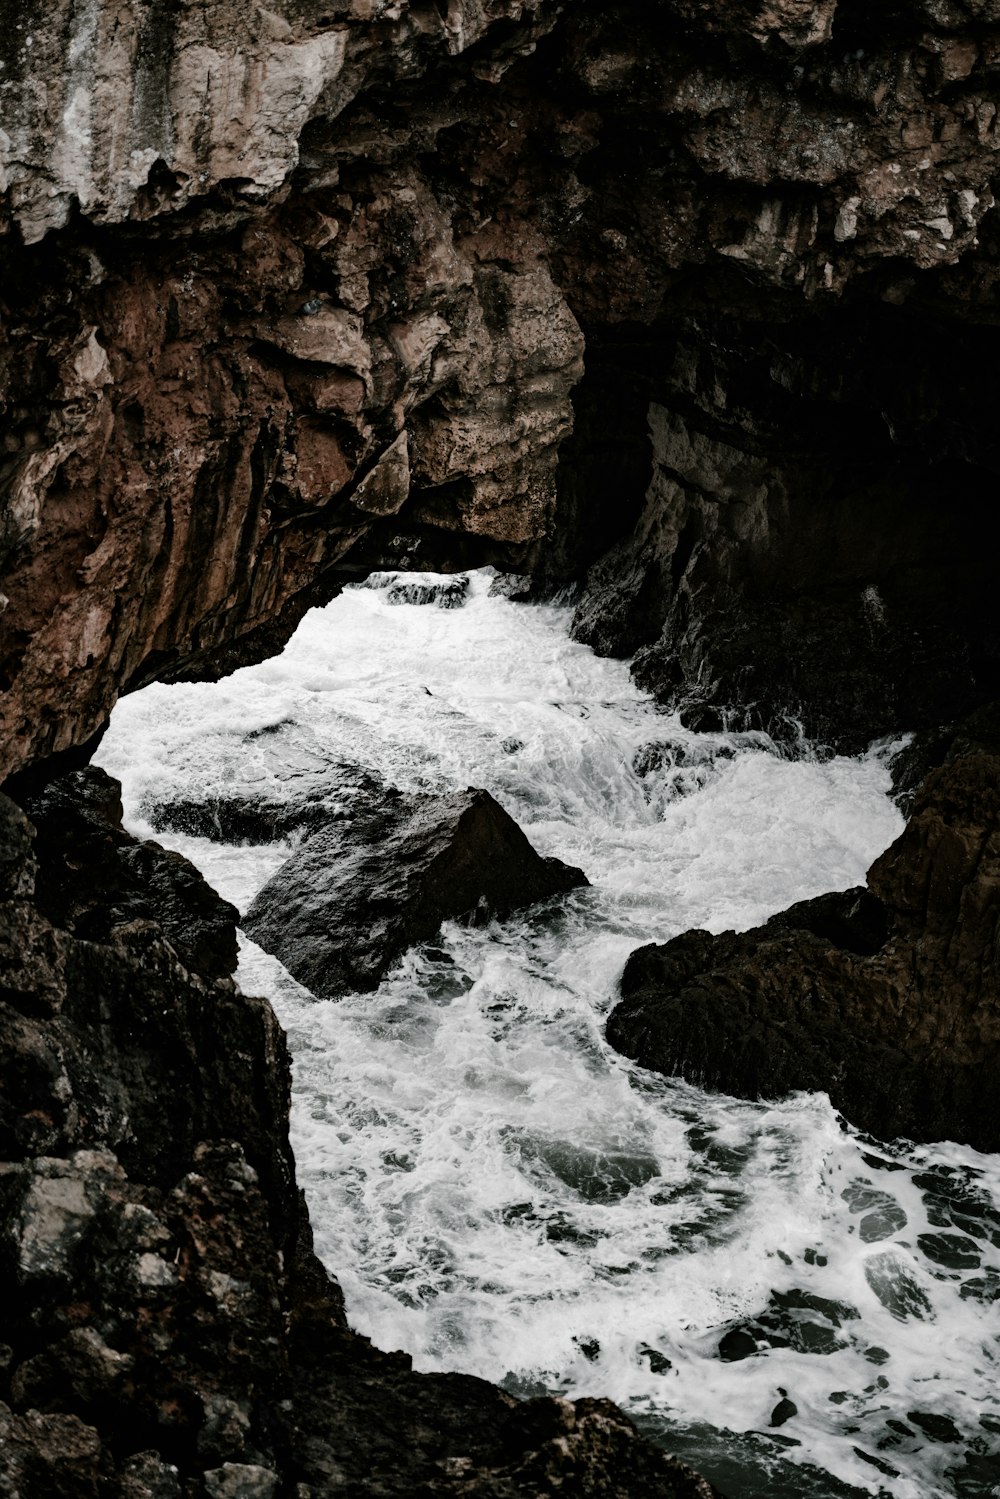 body of water between rock formations